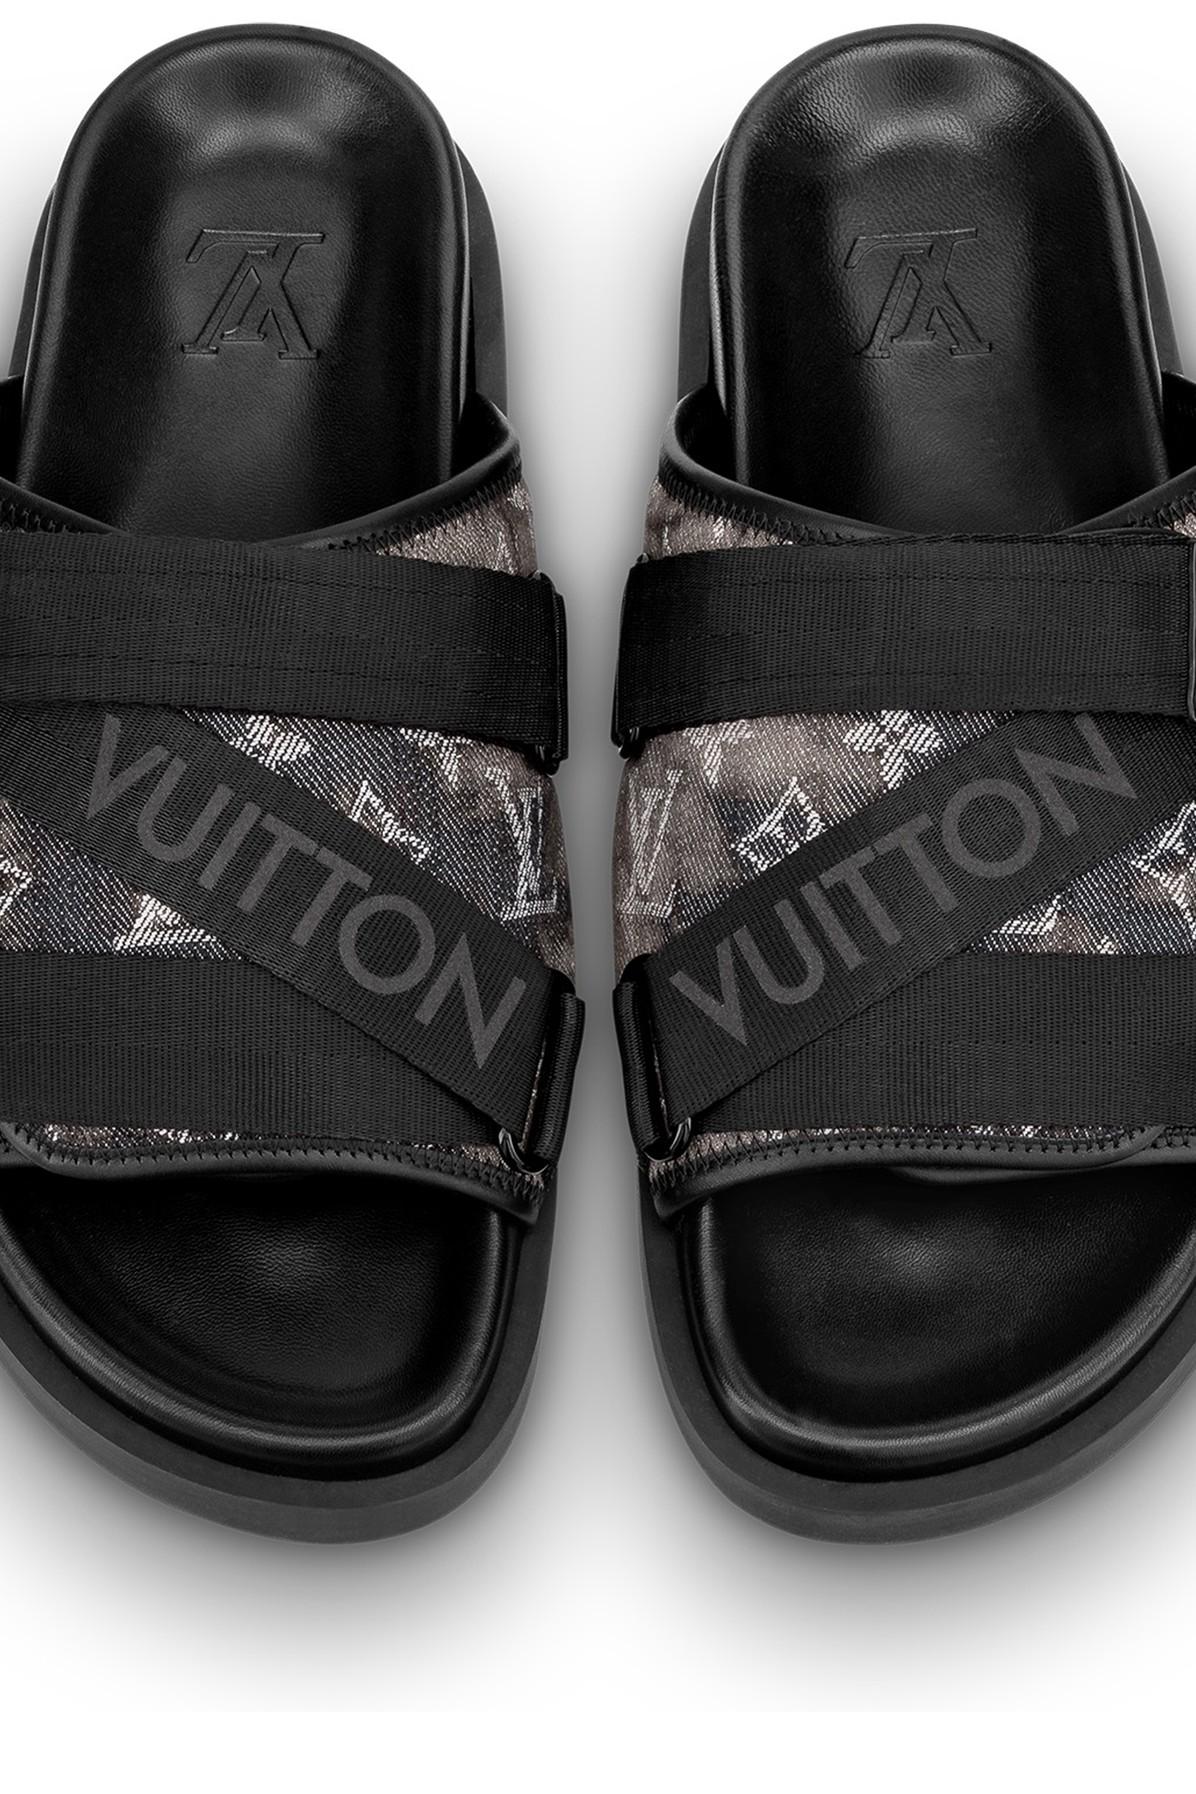 CITY BOY - YOUNGOHM with Louis Vuitton HONOLULU Mule Sandals ราคาอ้างอิงจาก Louis  Vuitton TH Website . Cr. #YOUNGOHM #LouisVuitton . อย่าลืม Like CIT